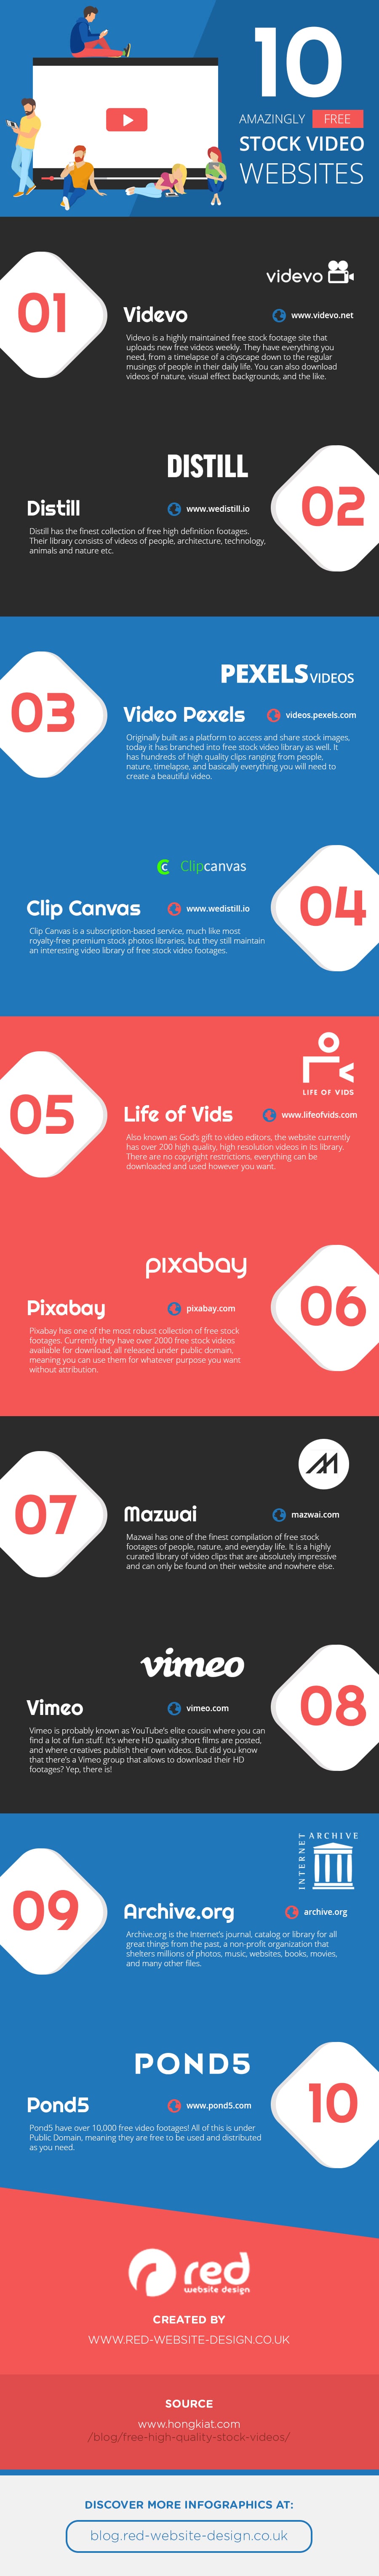 10 Free Stock Video Websites Infographic